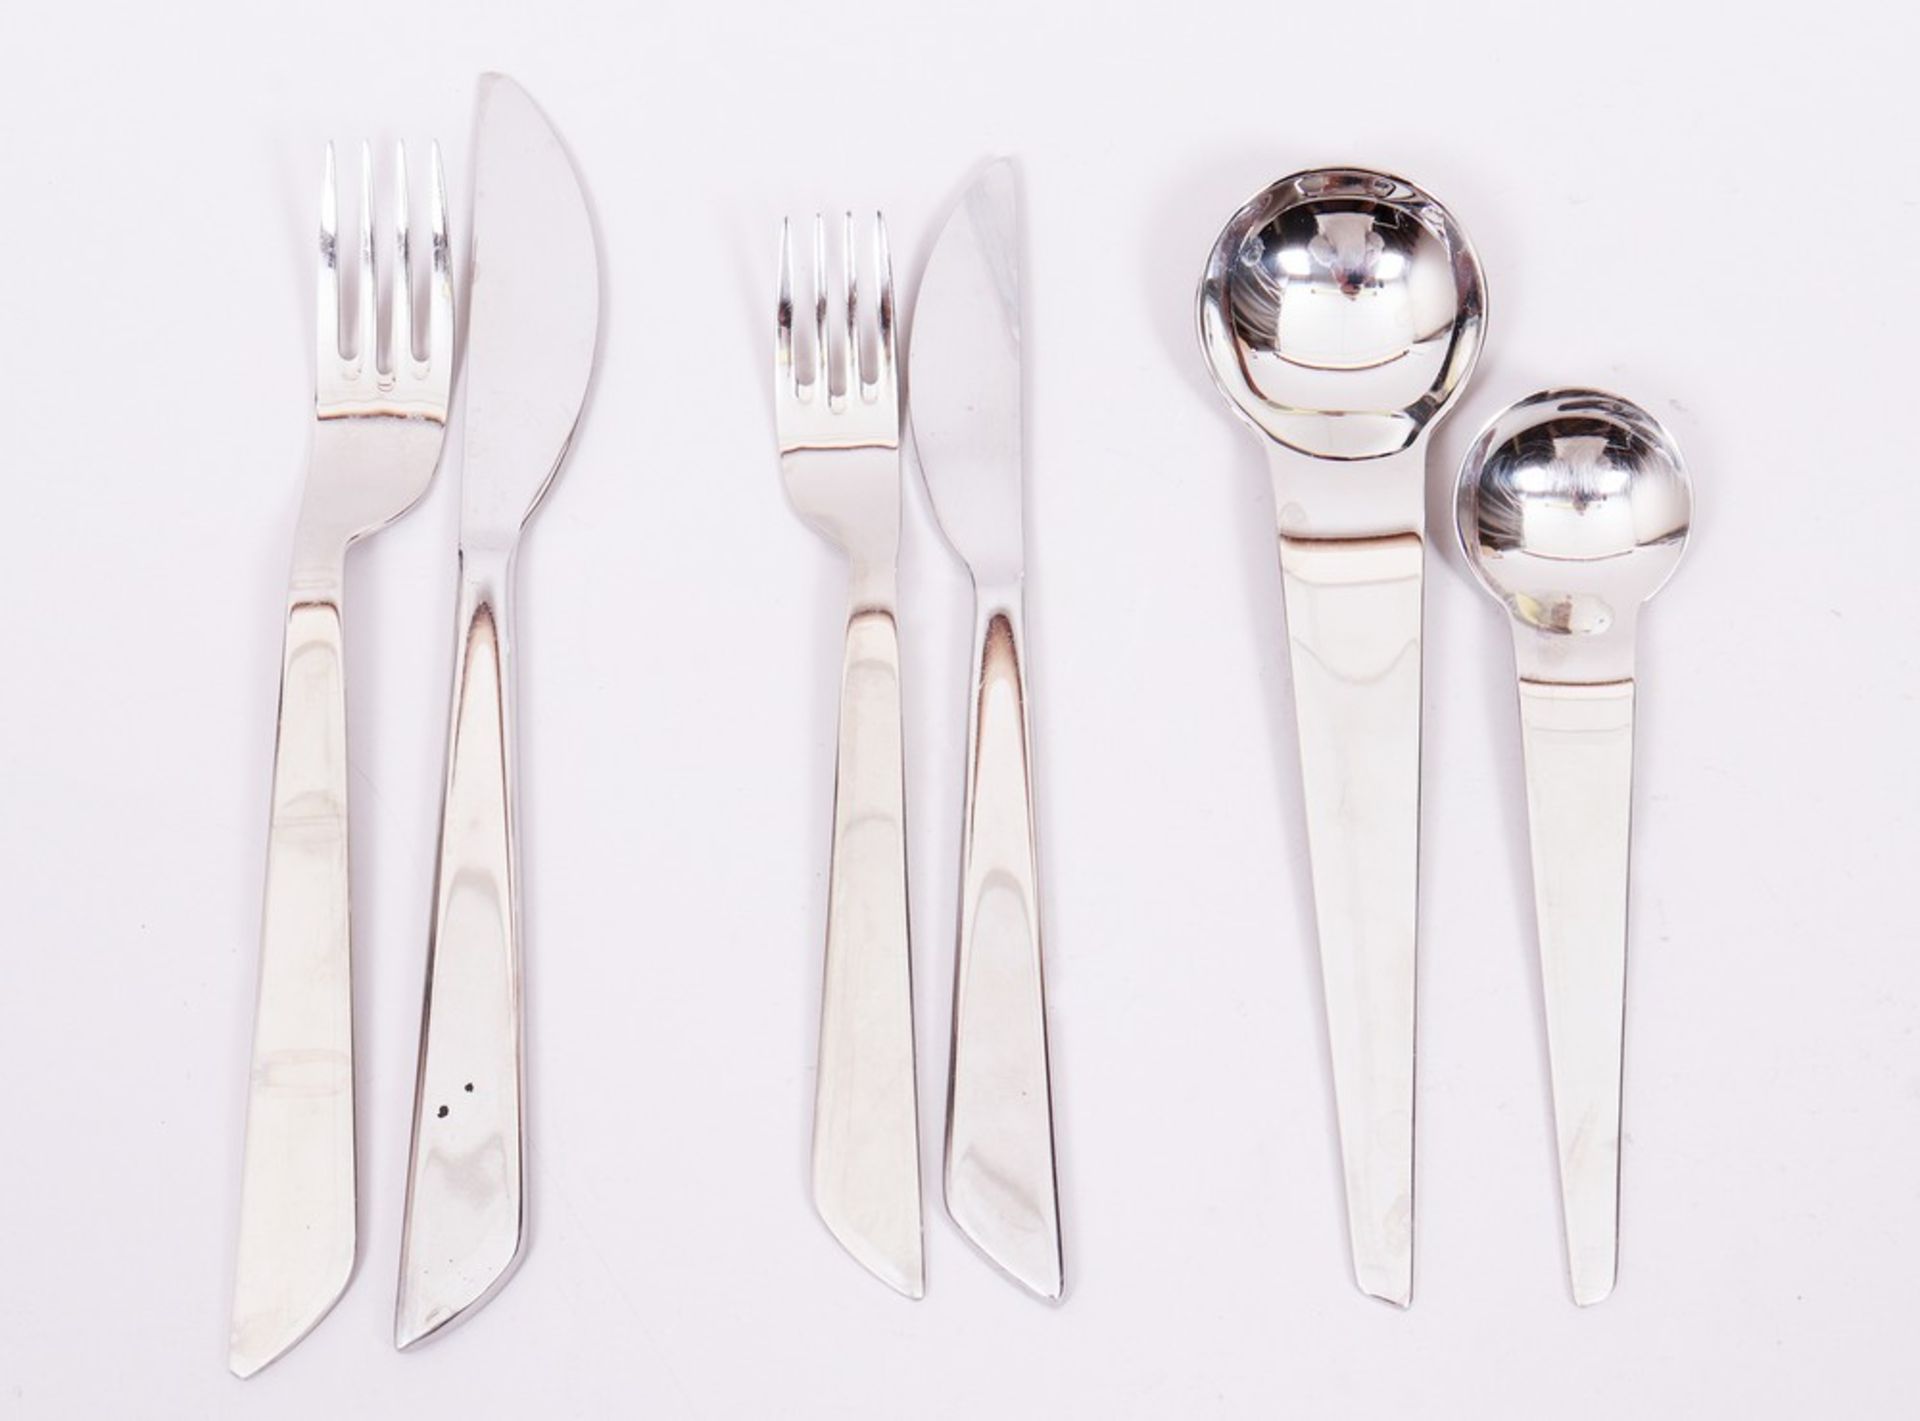 Cutlery for 10 people, design Peter Küster for WMF, Geislingen, 1990s - Image 4 of 6